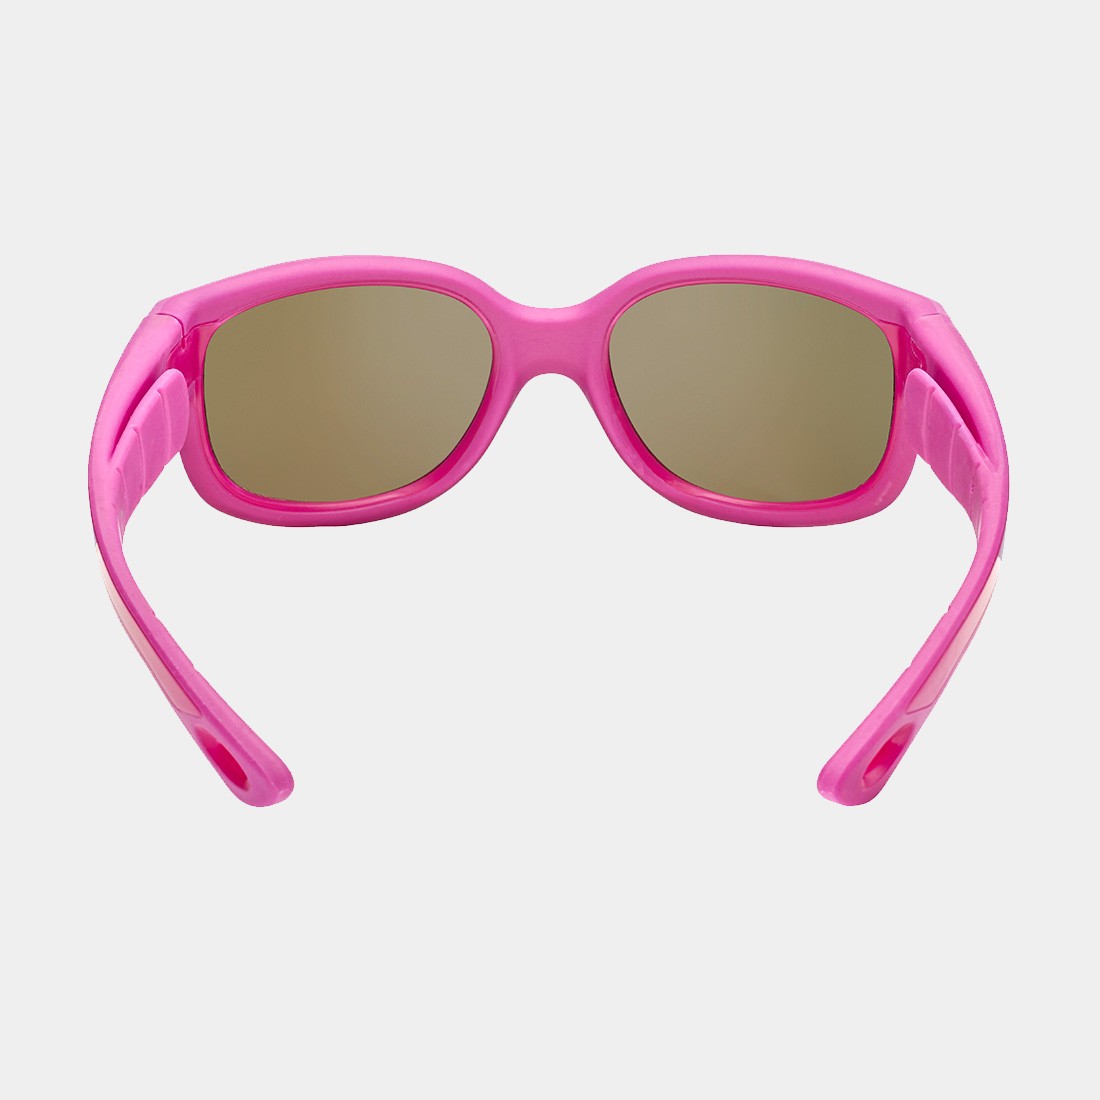 Cebe S-Pies Kids Sunglasses 3 - 5 yrs (Pink)